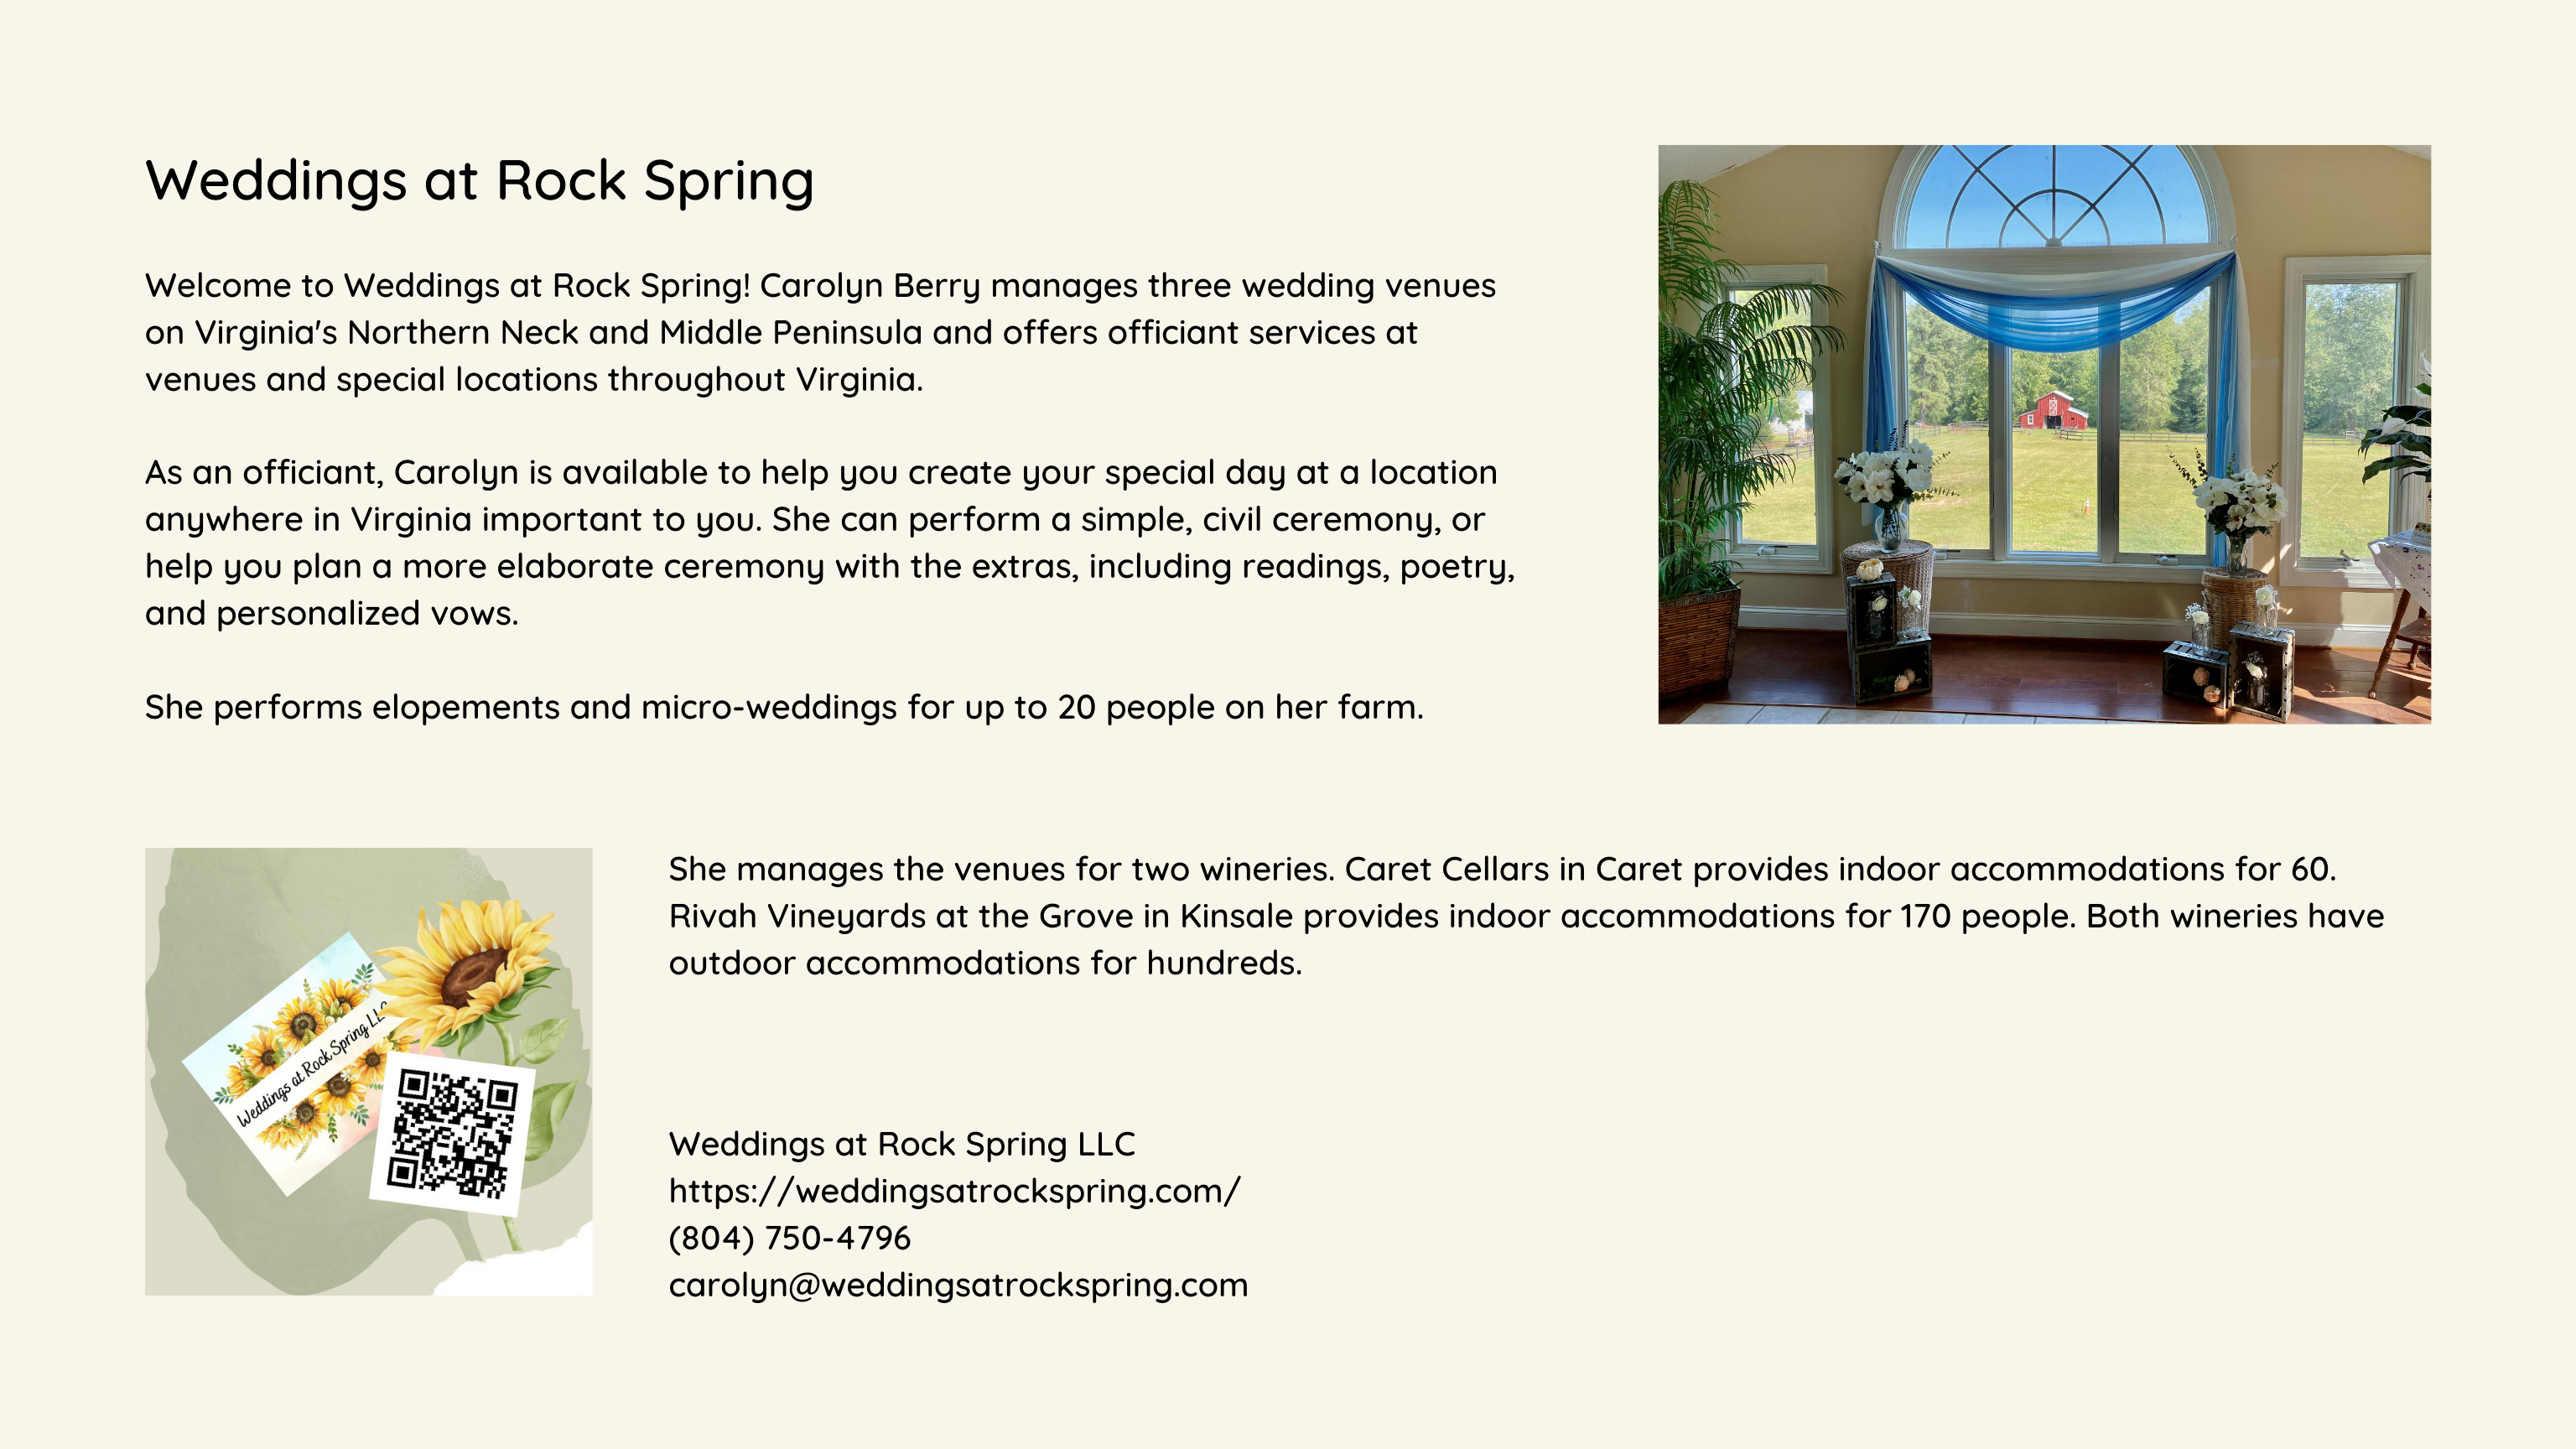 Weddings at Rock Spring LLC